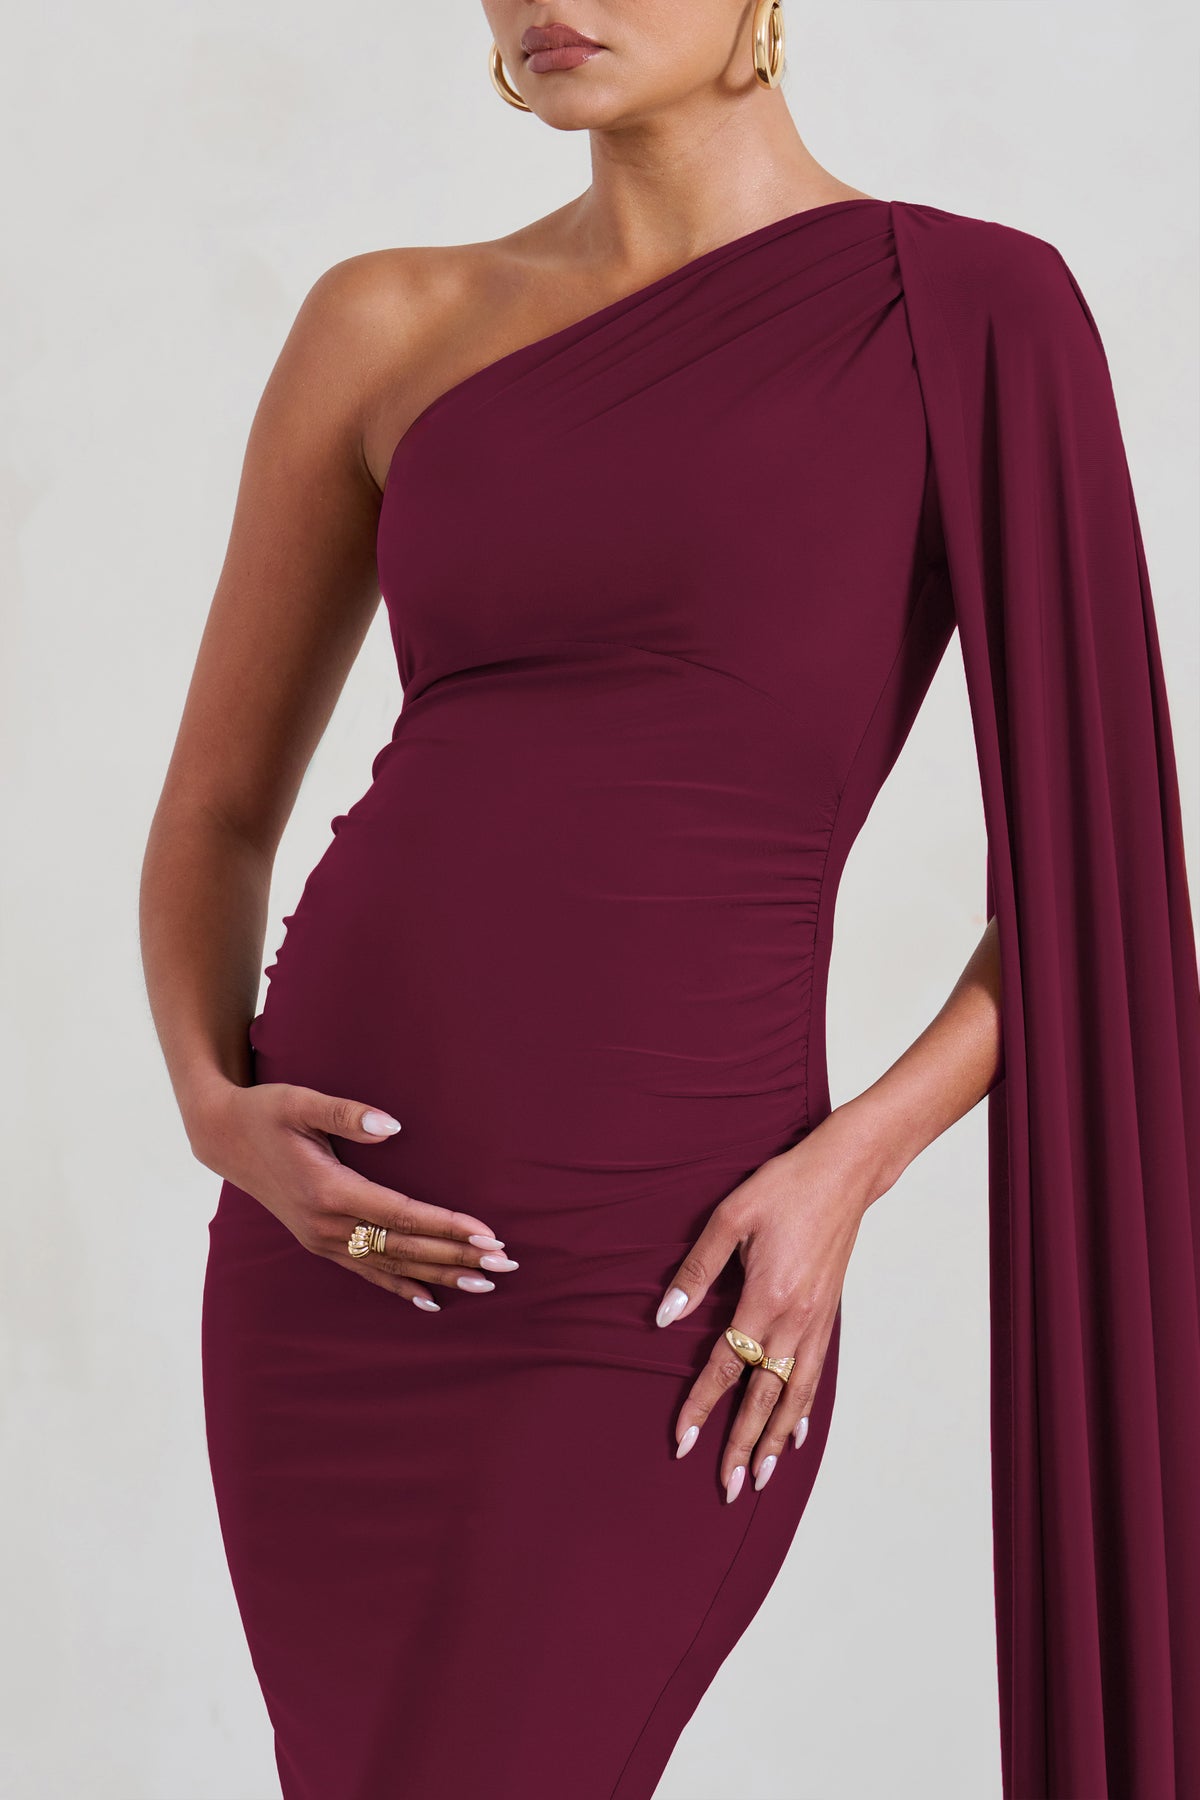 Capreze Ladies Maternity Maxi Dress Long Sleeve Pregnancy Kaftan Square  Neck Wine Red L 